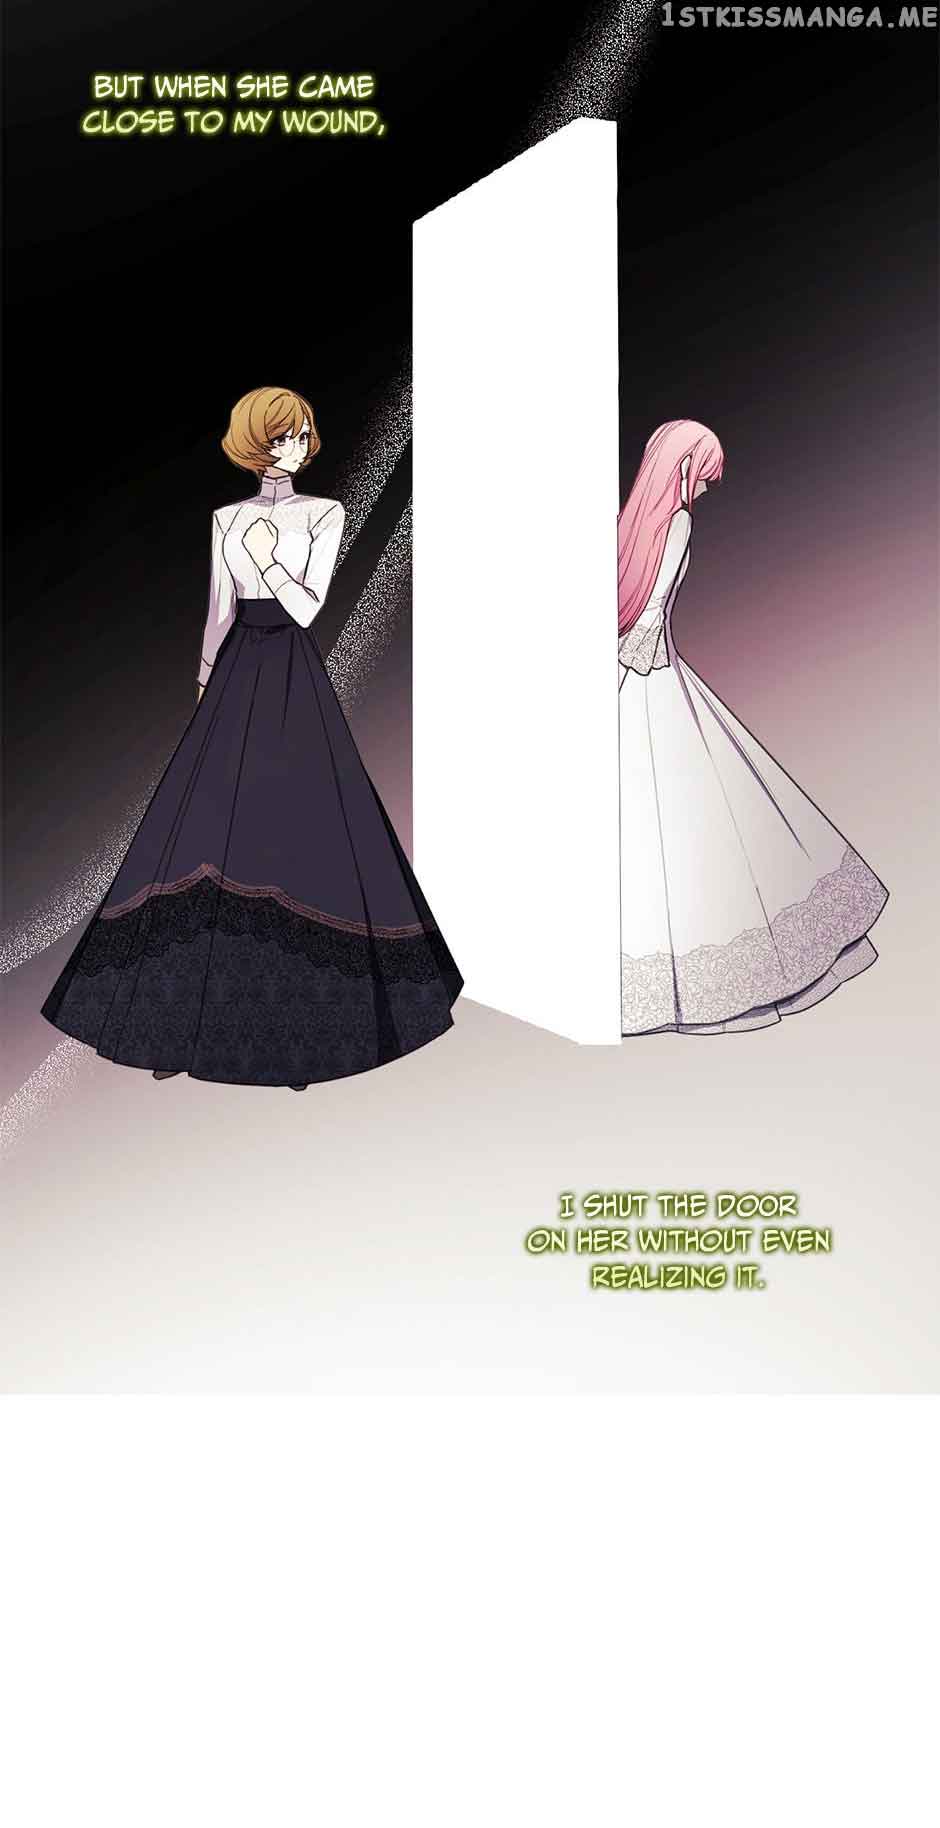 Princess’s Doll Shop chapter 46